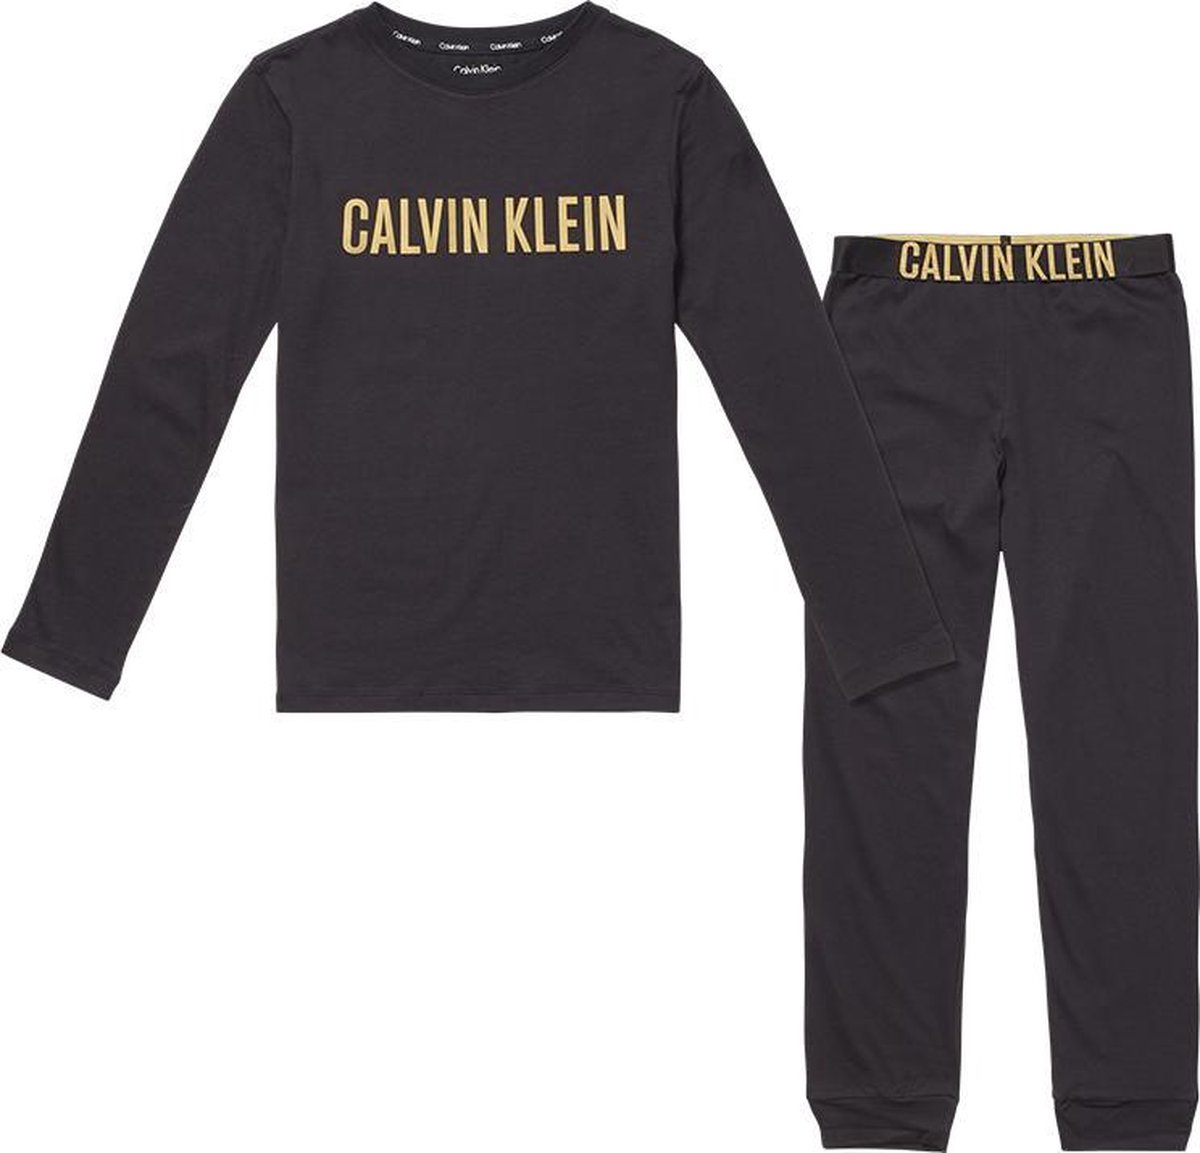 Calvin Klein - Uni - Kinderen Lounge/Slaap Set - Zwart - 140/146 | bol.com